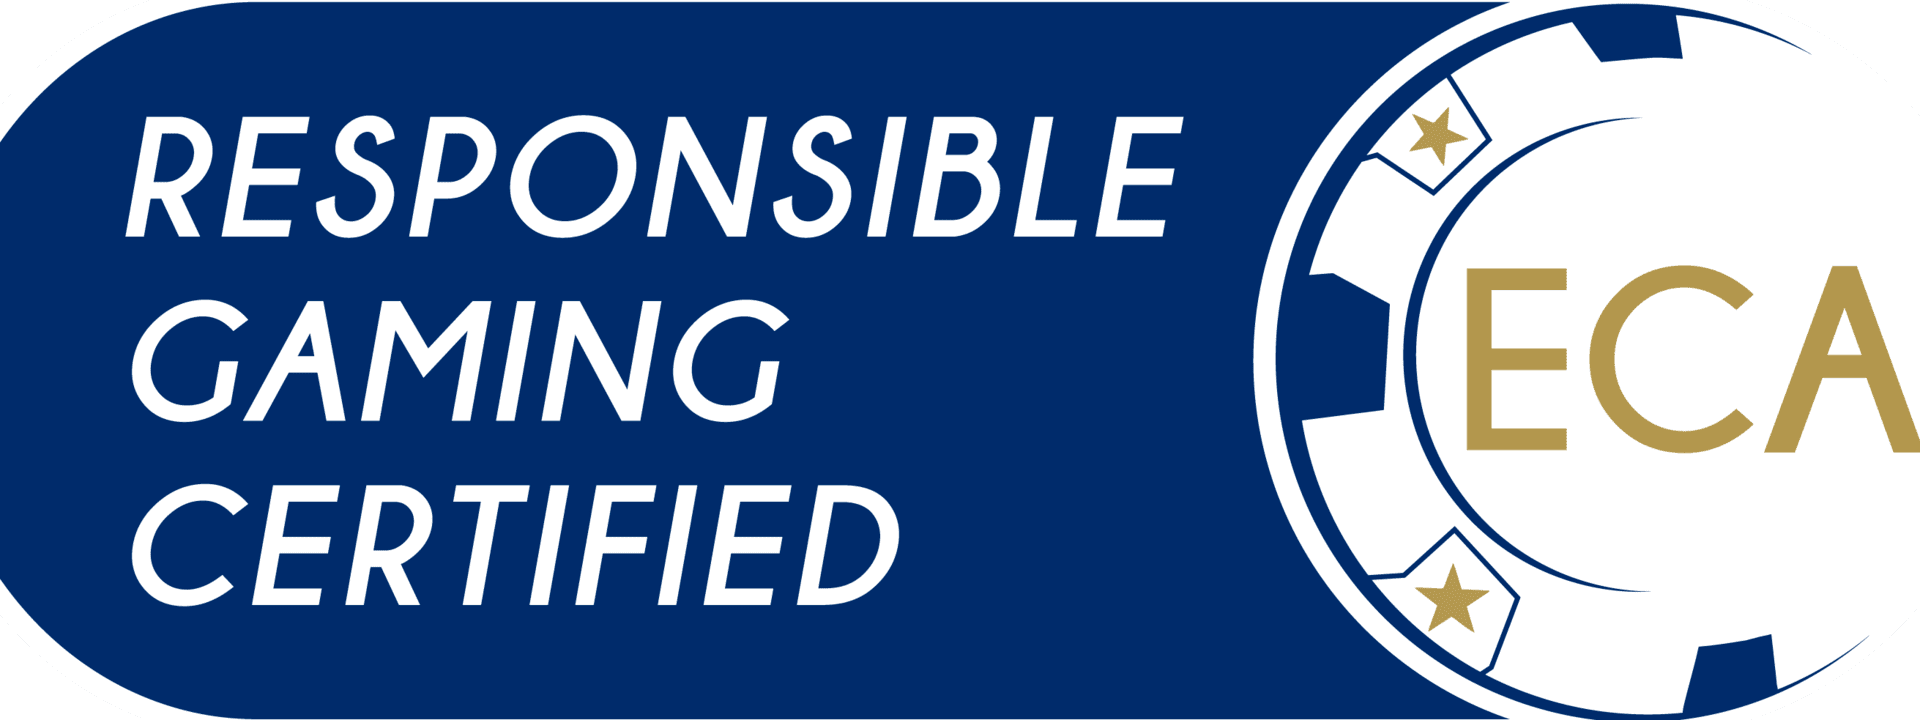 logo certification jeu responsable